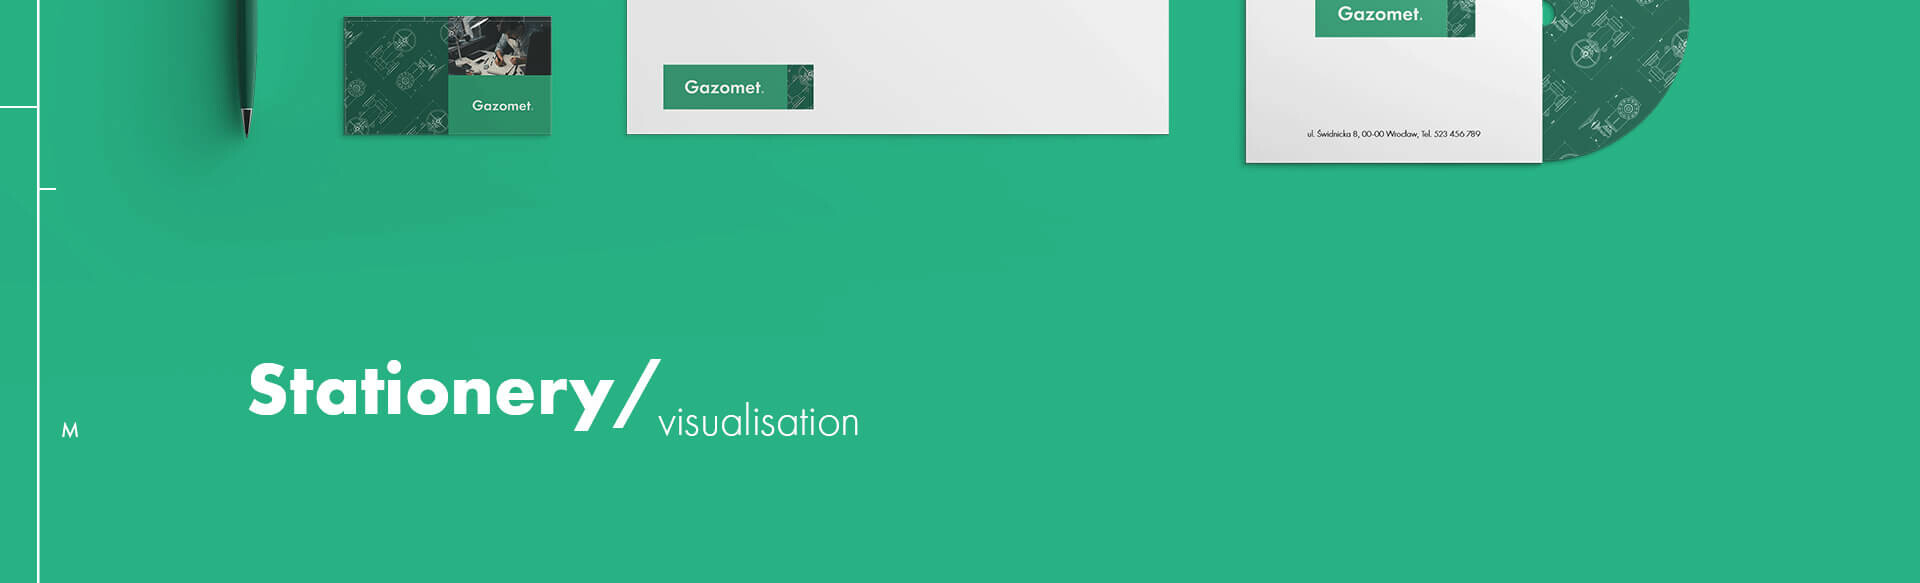 Stationery visualisation header on green background